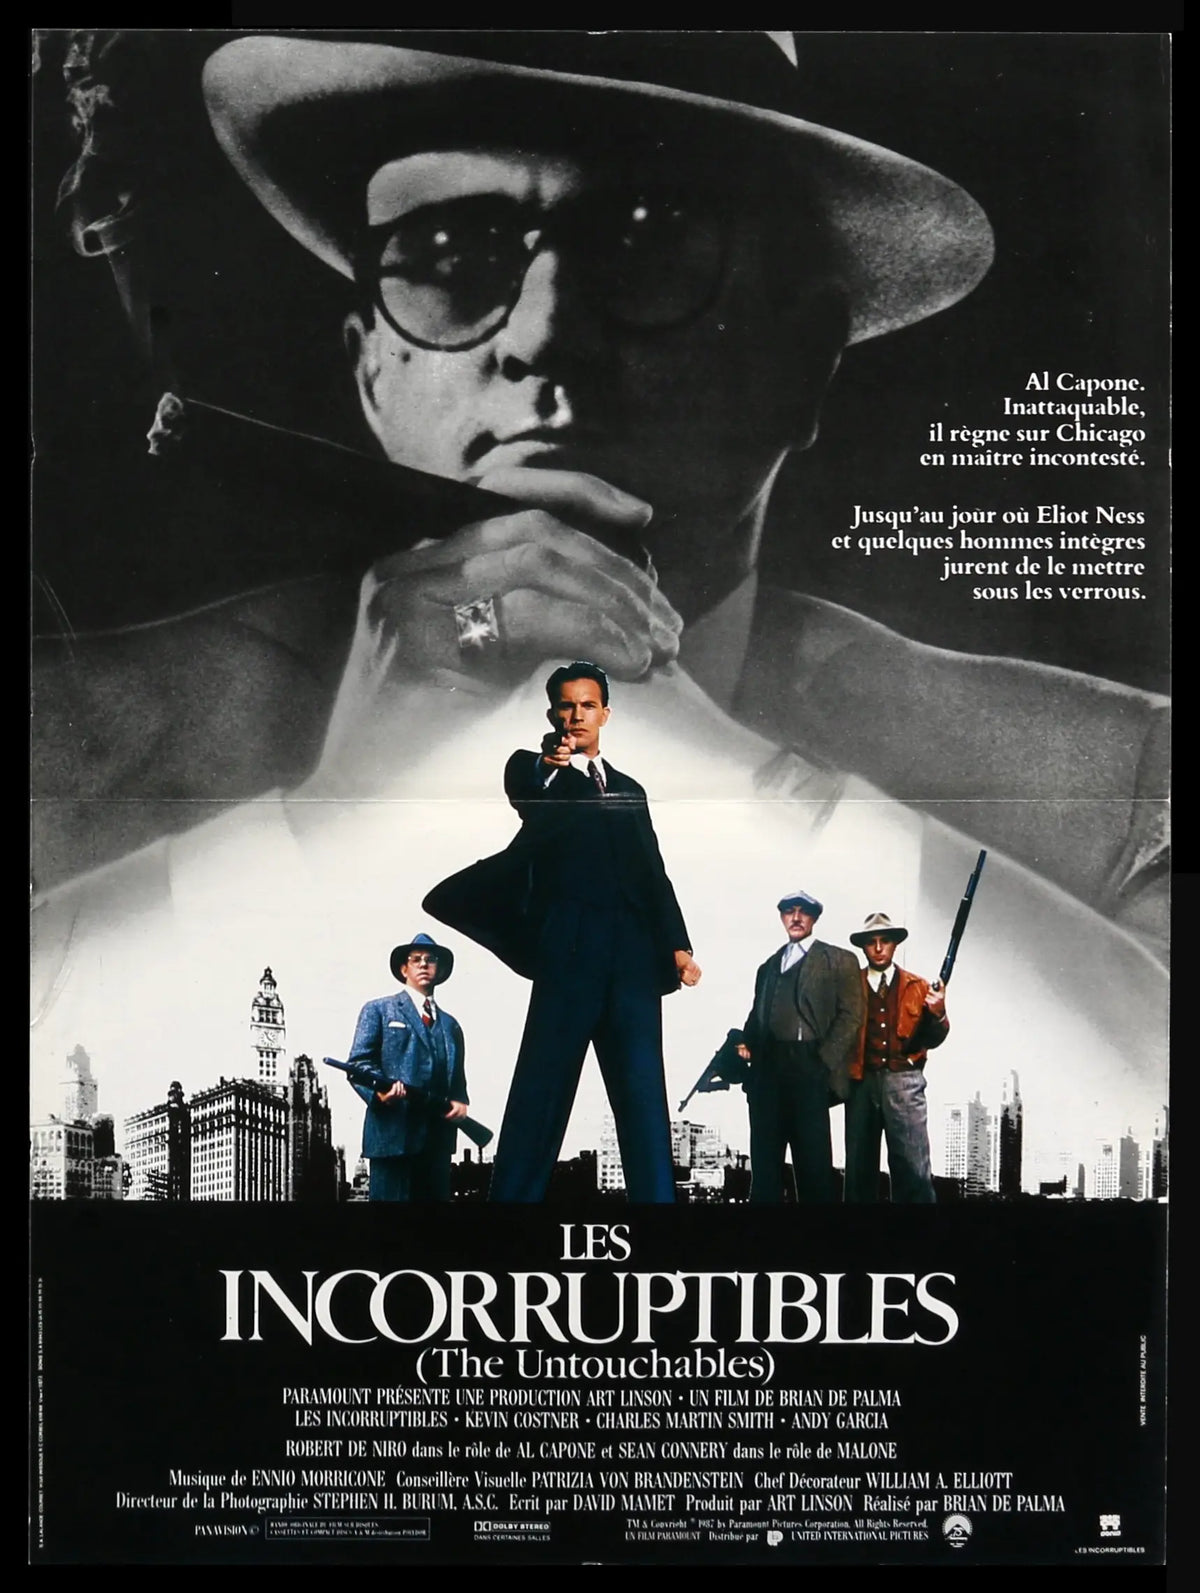 Untouchables (1987) original movie poster for sale at Original Film Art